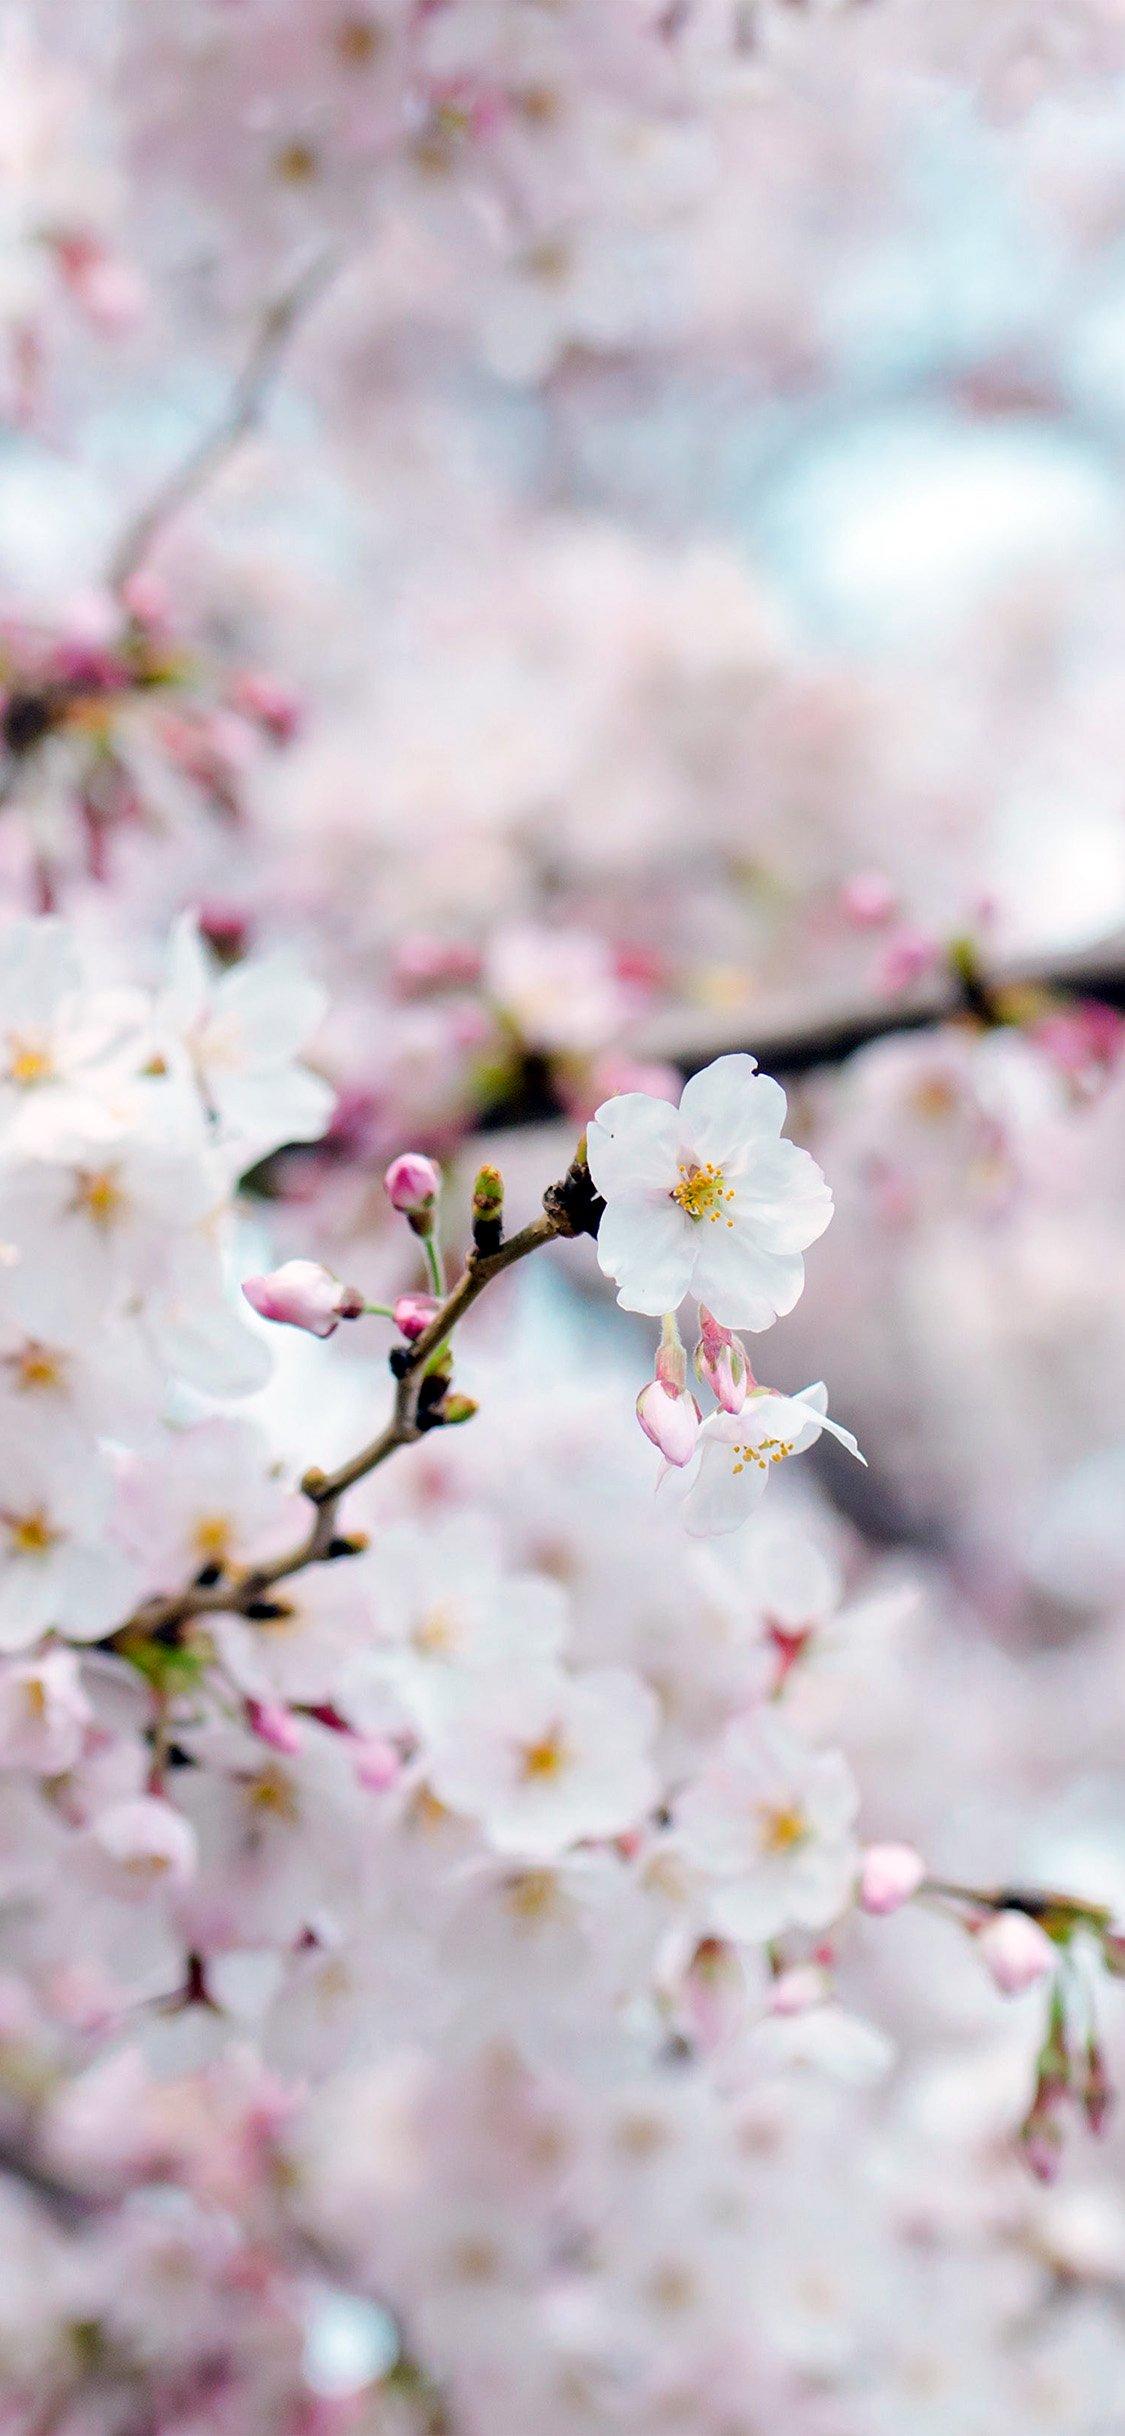 iPhone wallpaper. cherry blossom flower